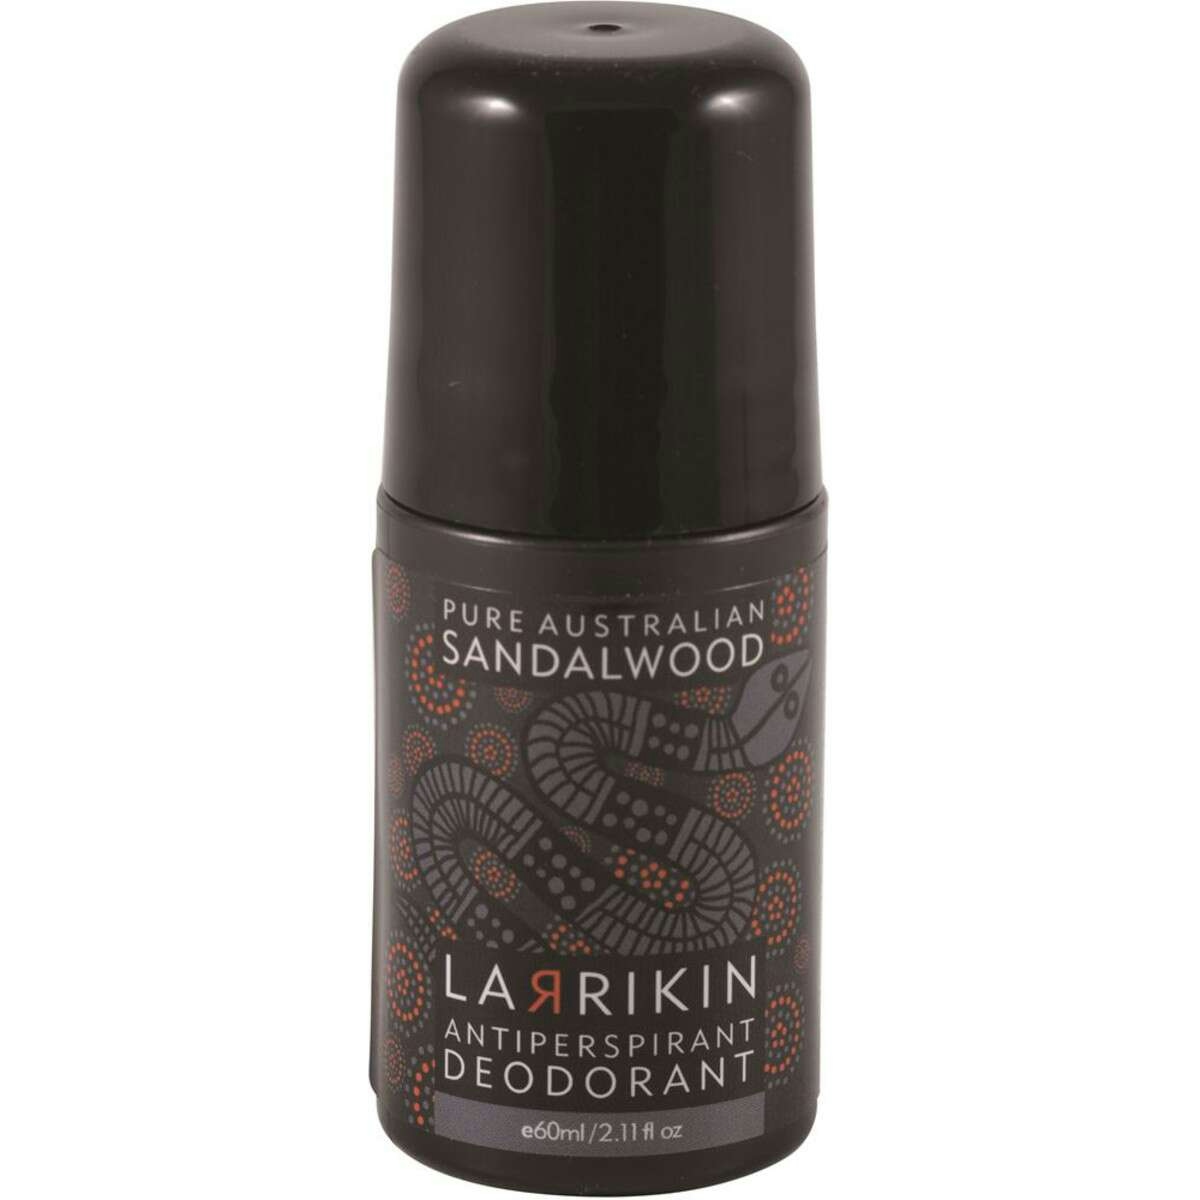 image of Pure Australian Sandalwood Larrikin Antiperspirant Deodorant Roll On 60ml on white background